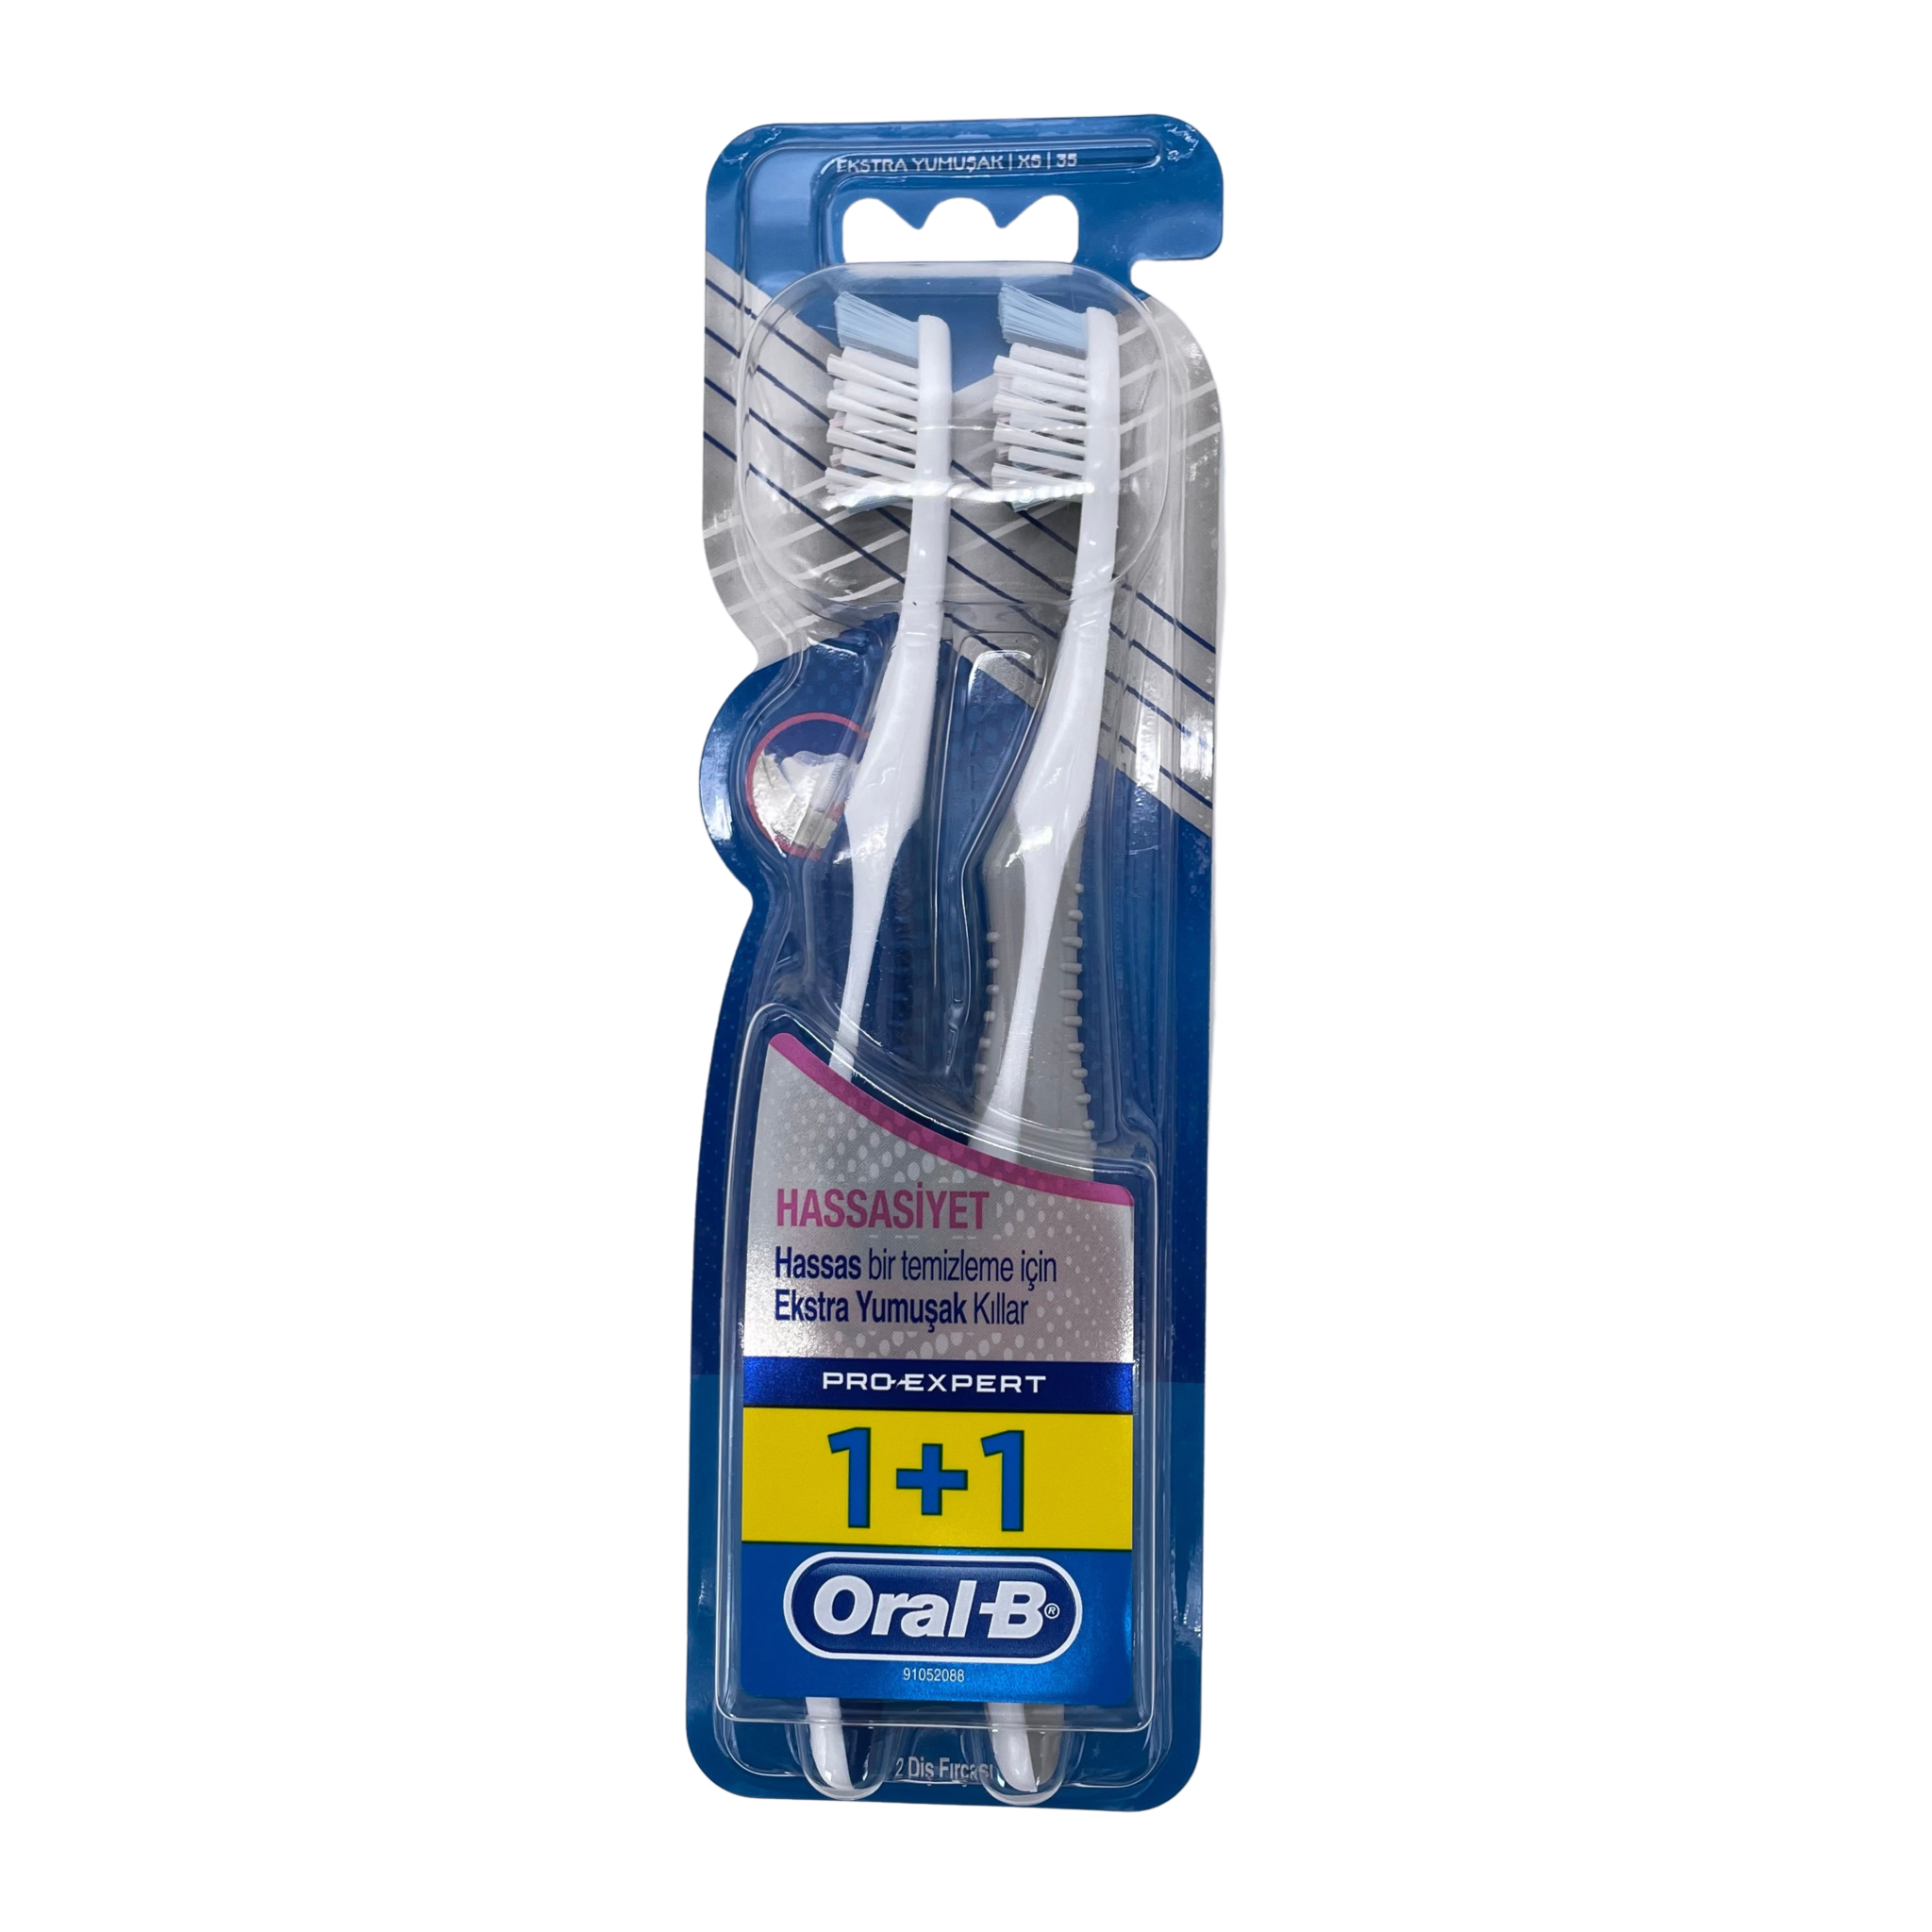 Oral-B Pro-Expert Sensitive tandenborstel 1+1